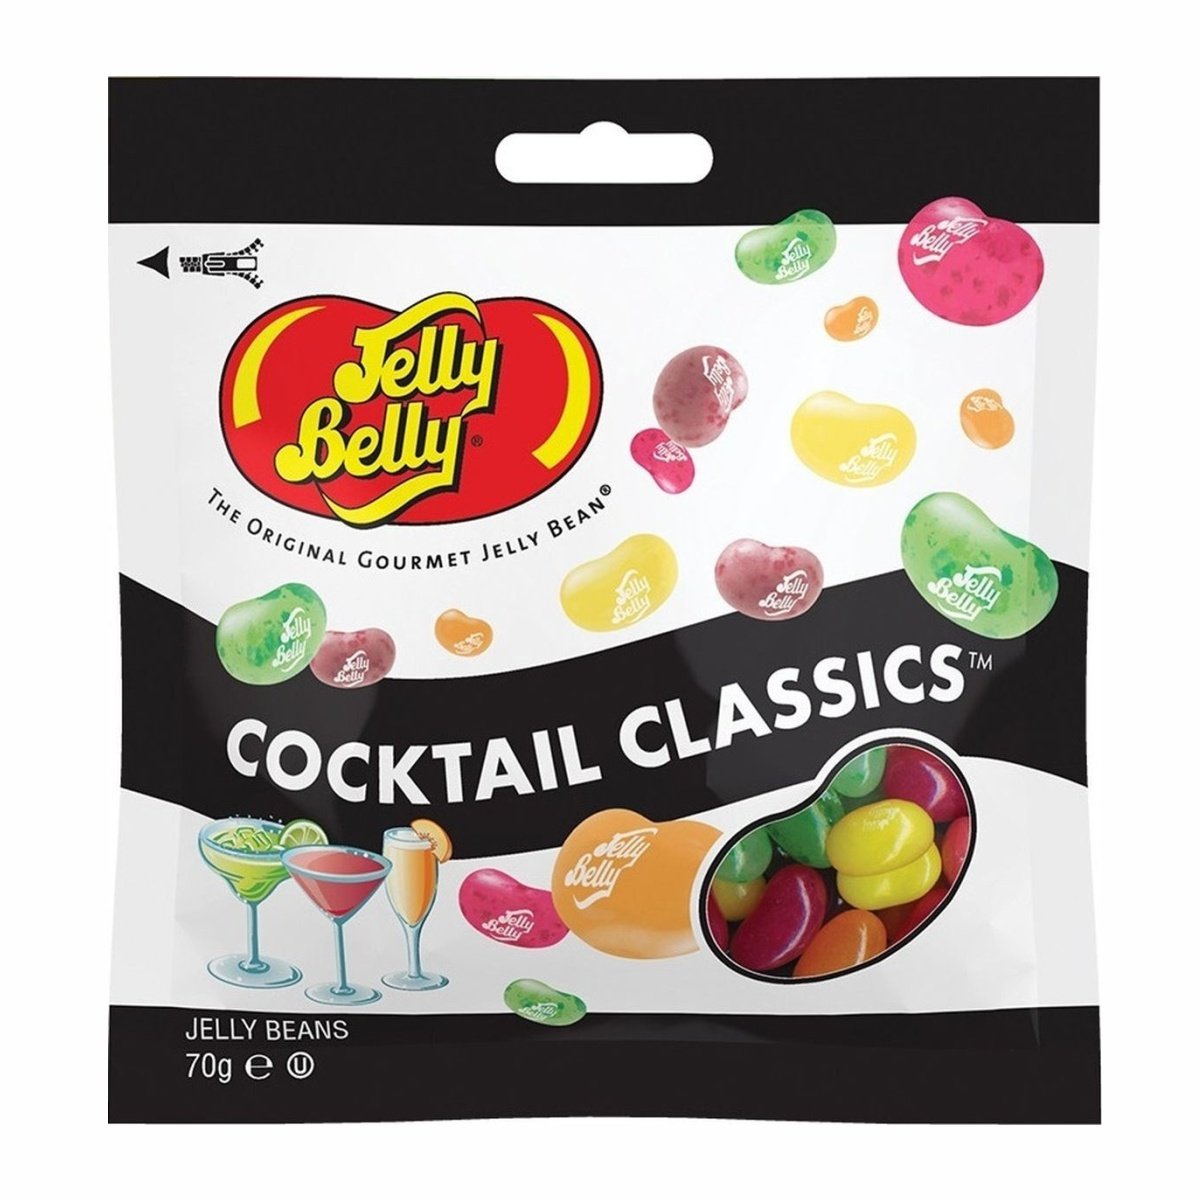 Вкусы jelly. Cocktail Classic Джелли Белли. Драже жевательное Jelly belly. Жевательные конфеты Jelly belly коктейль Классик, (пакет) 70гр. Jelly belly Cocktail Classics вкусы.